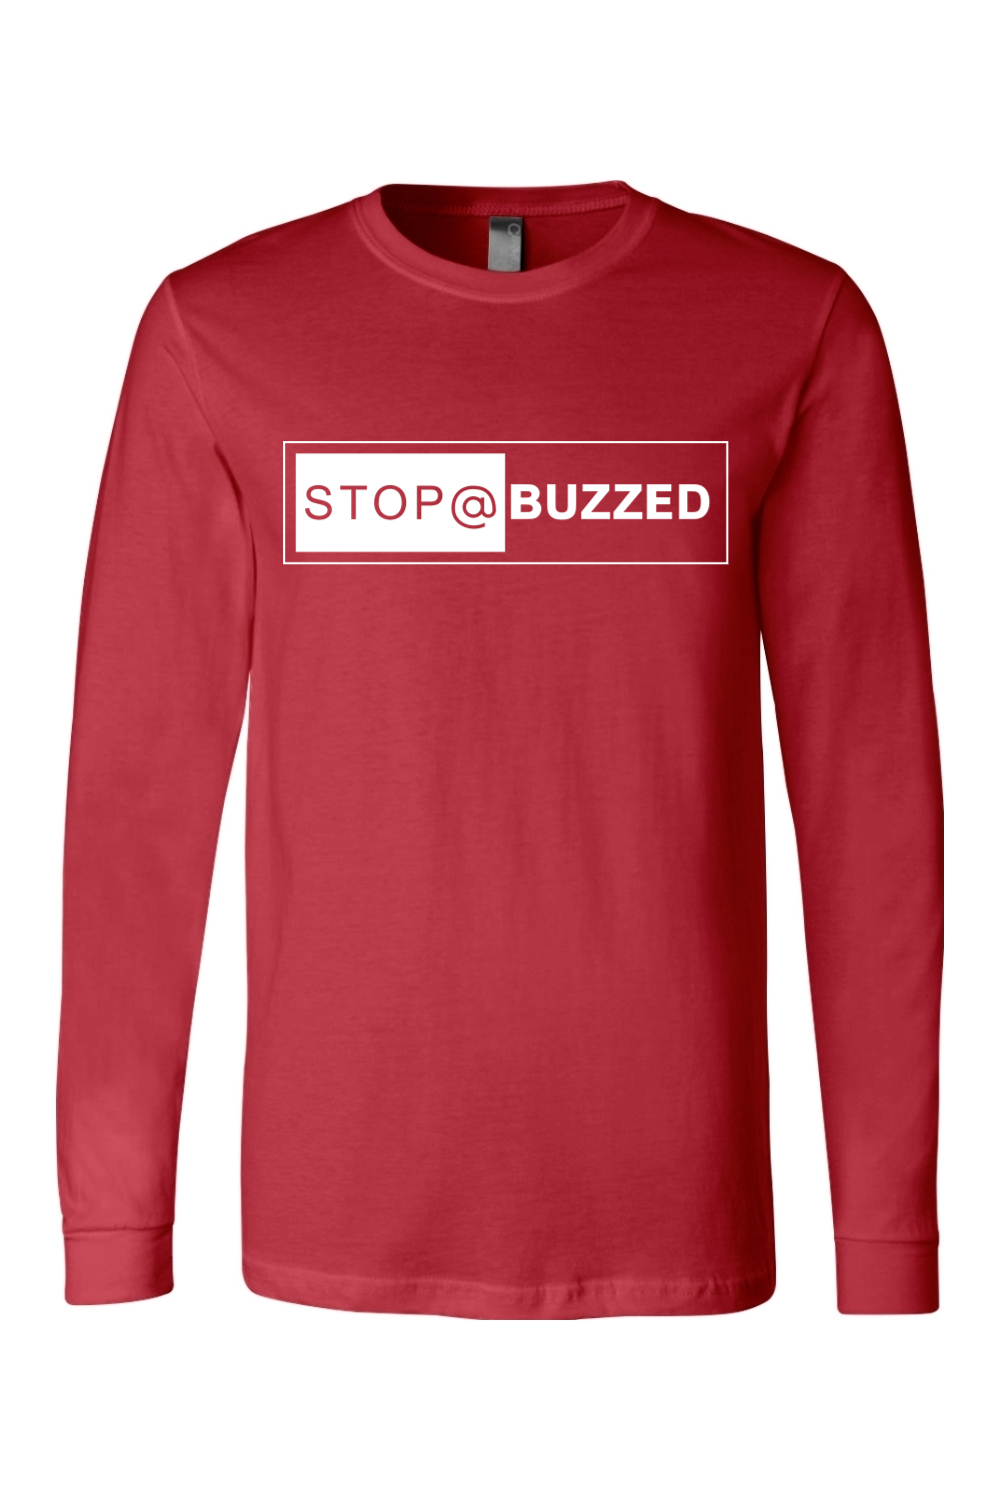 Stop @ Buzzed BELLA + CANVAS Unisex Jersey Long Sleeve Tee